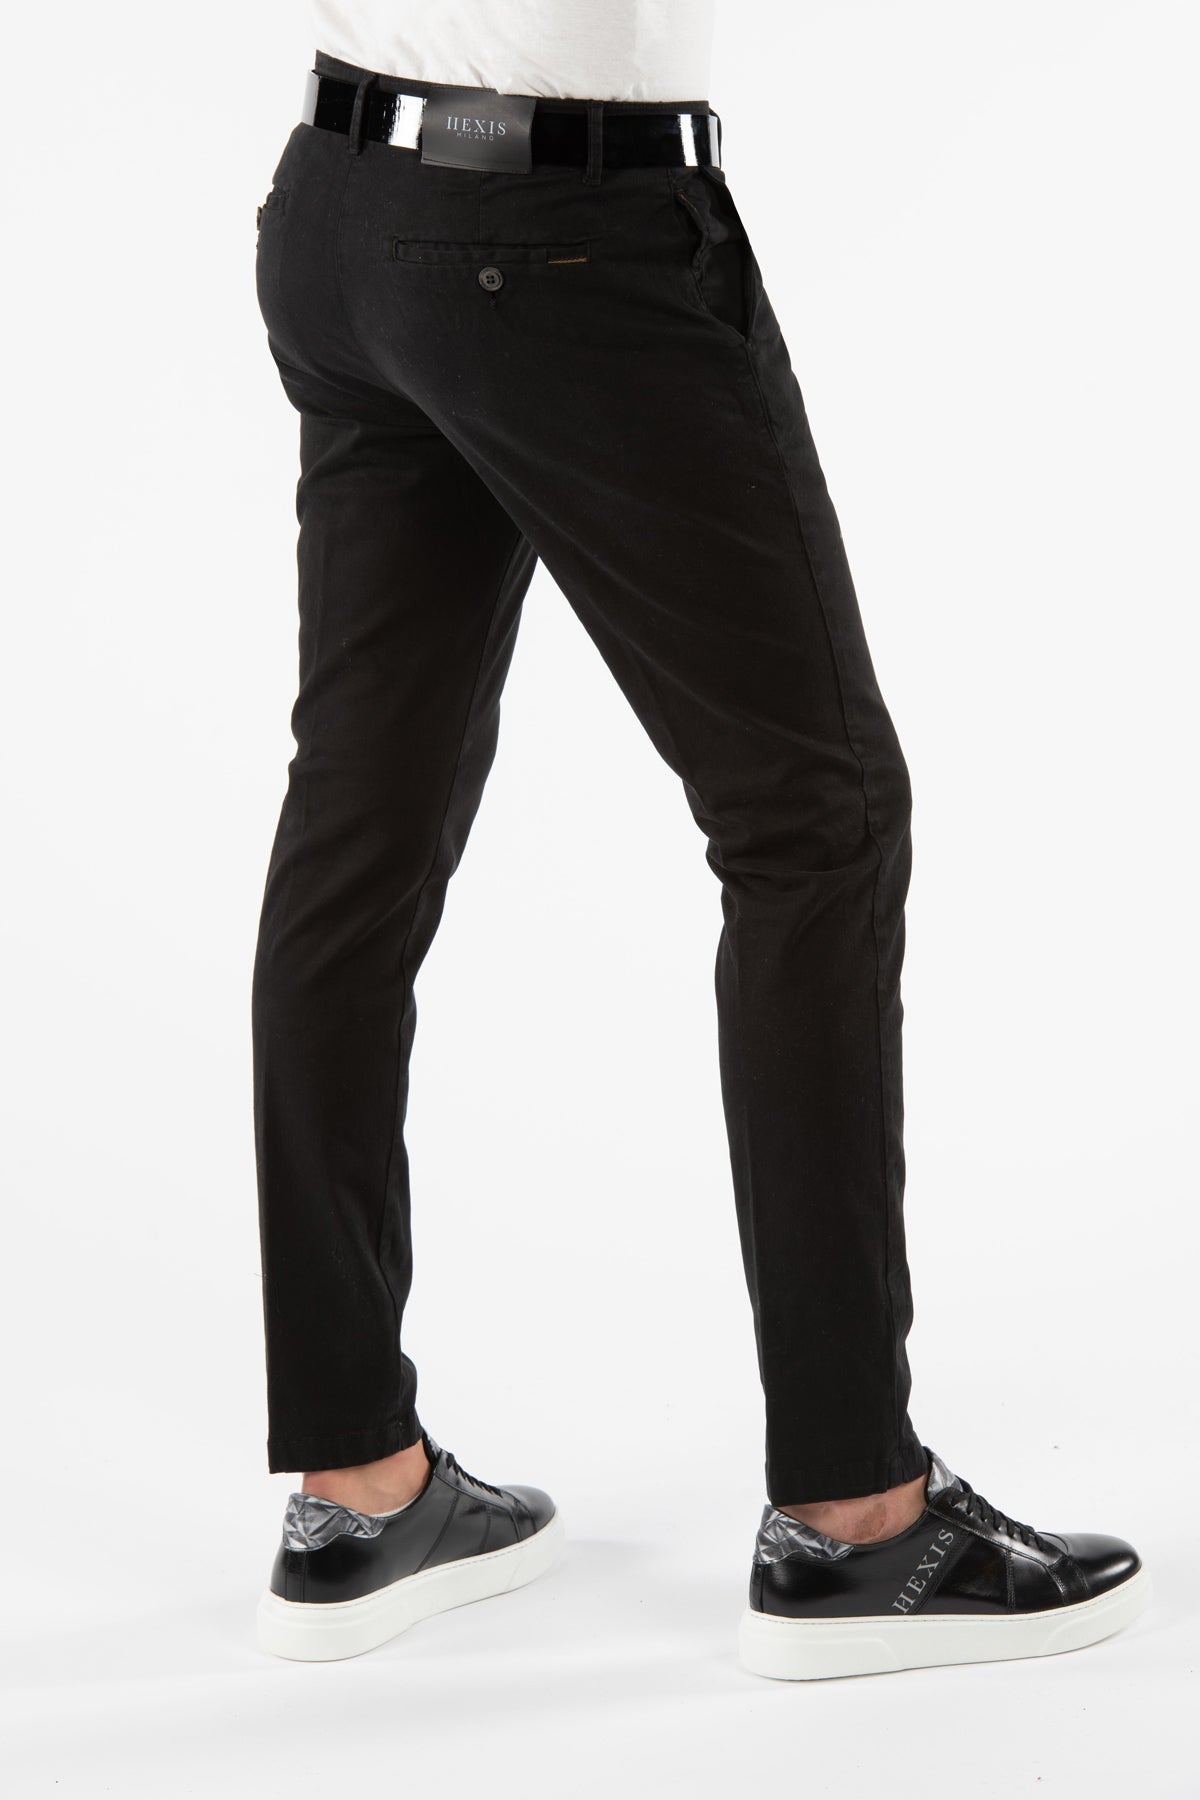 Chino Canary Warf stretch trousers